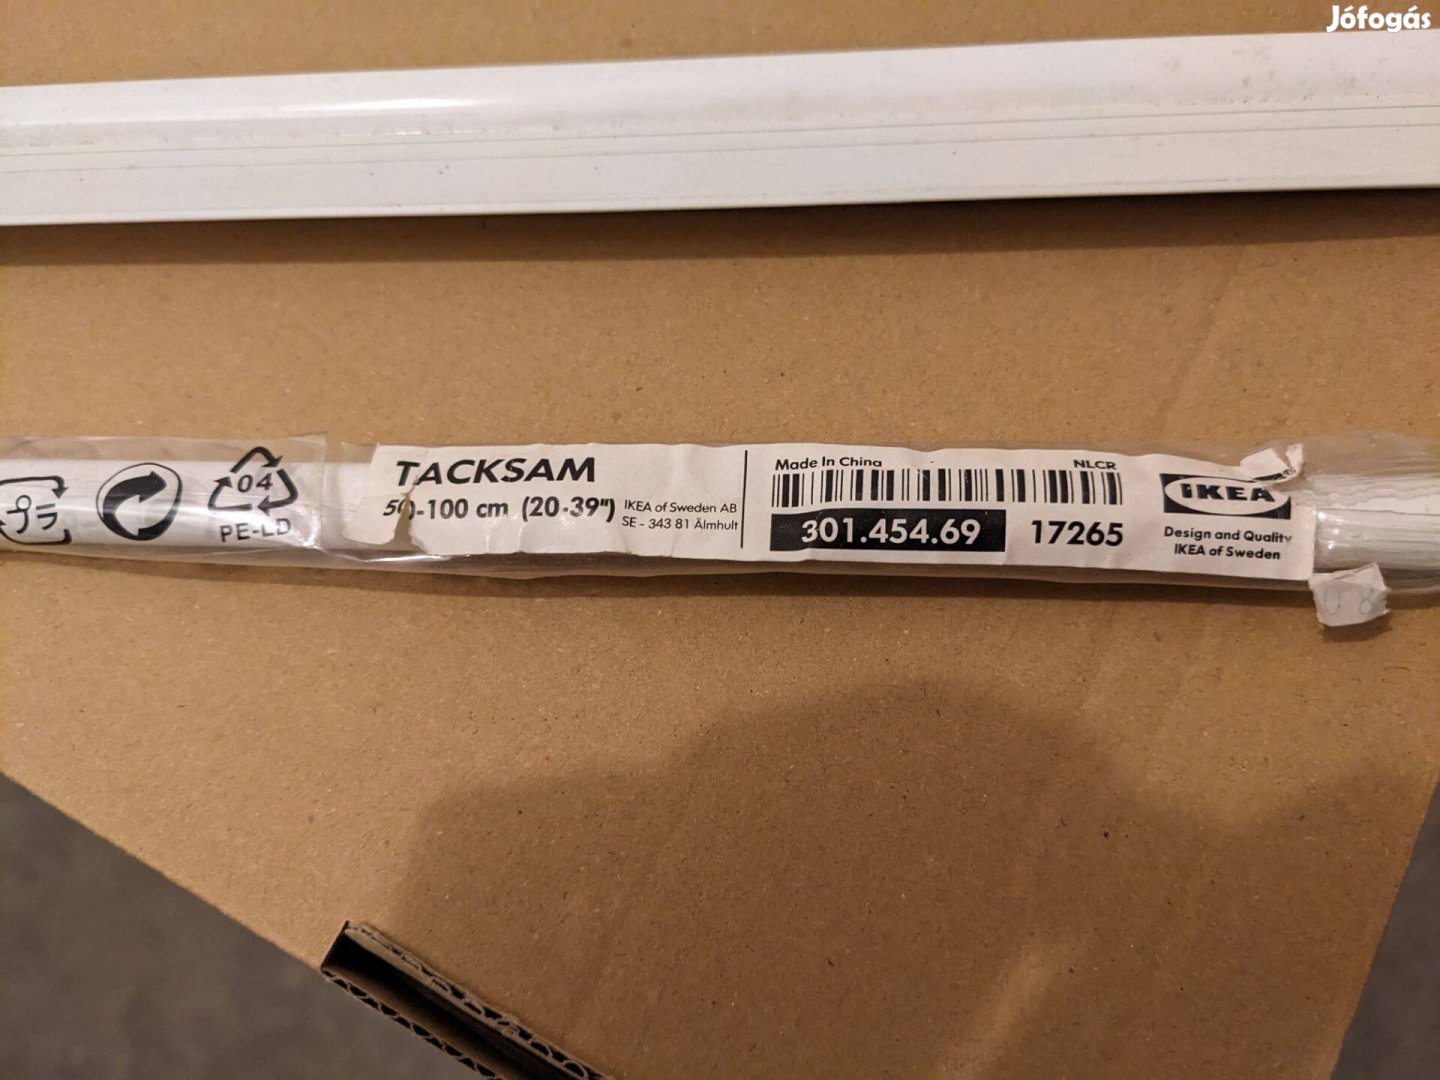 Ikea Tacksam, 50-100cm függönysín, karnis